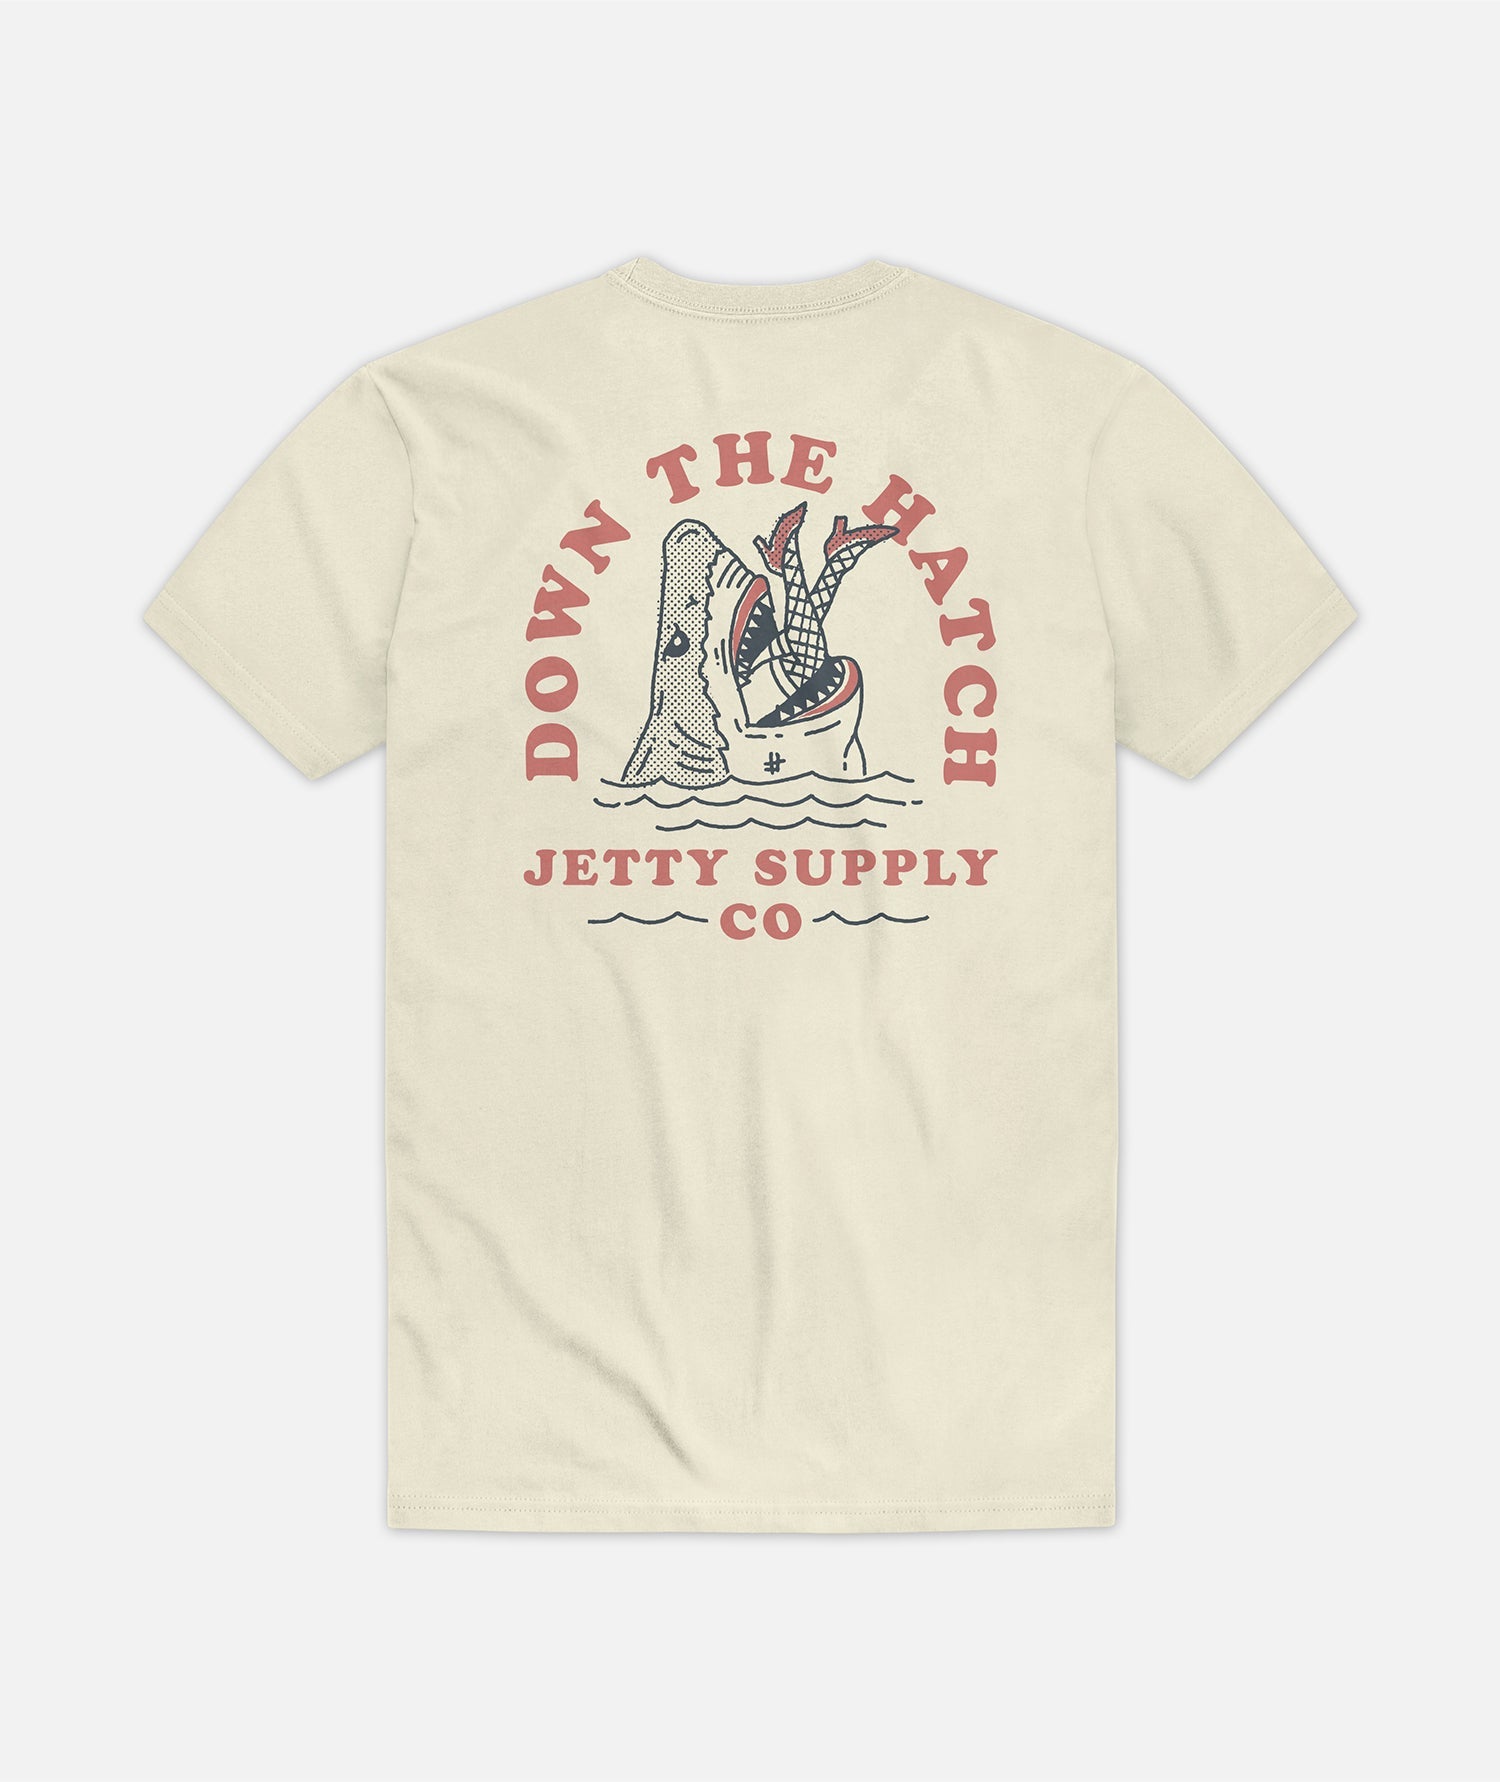 Jetty Hatch Tee Shirt - 88 Gear